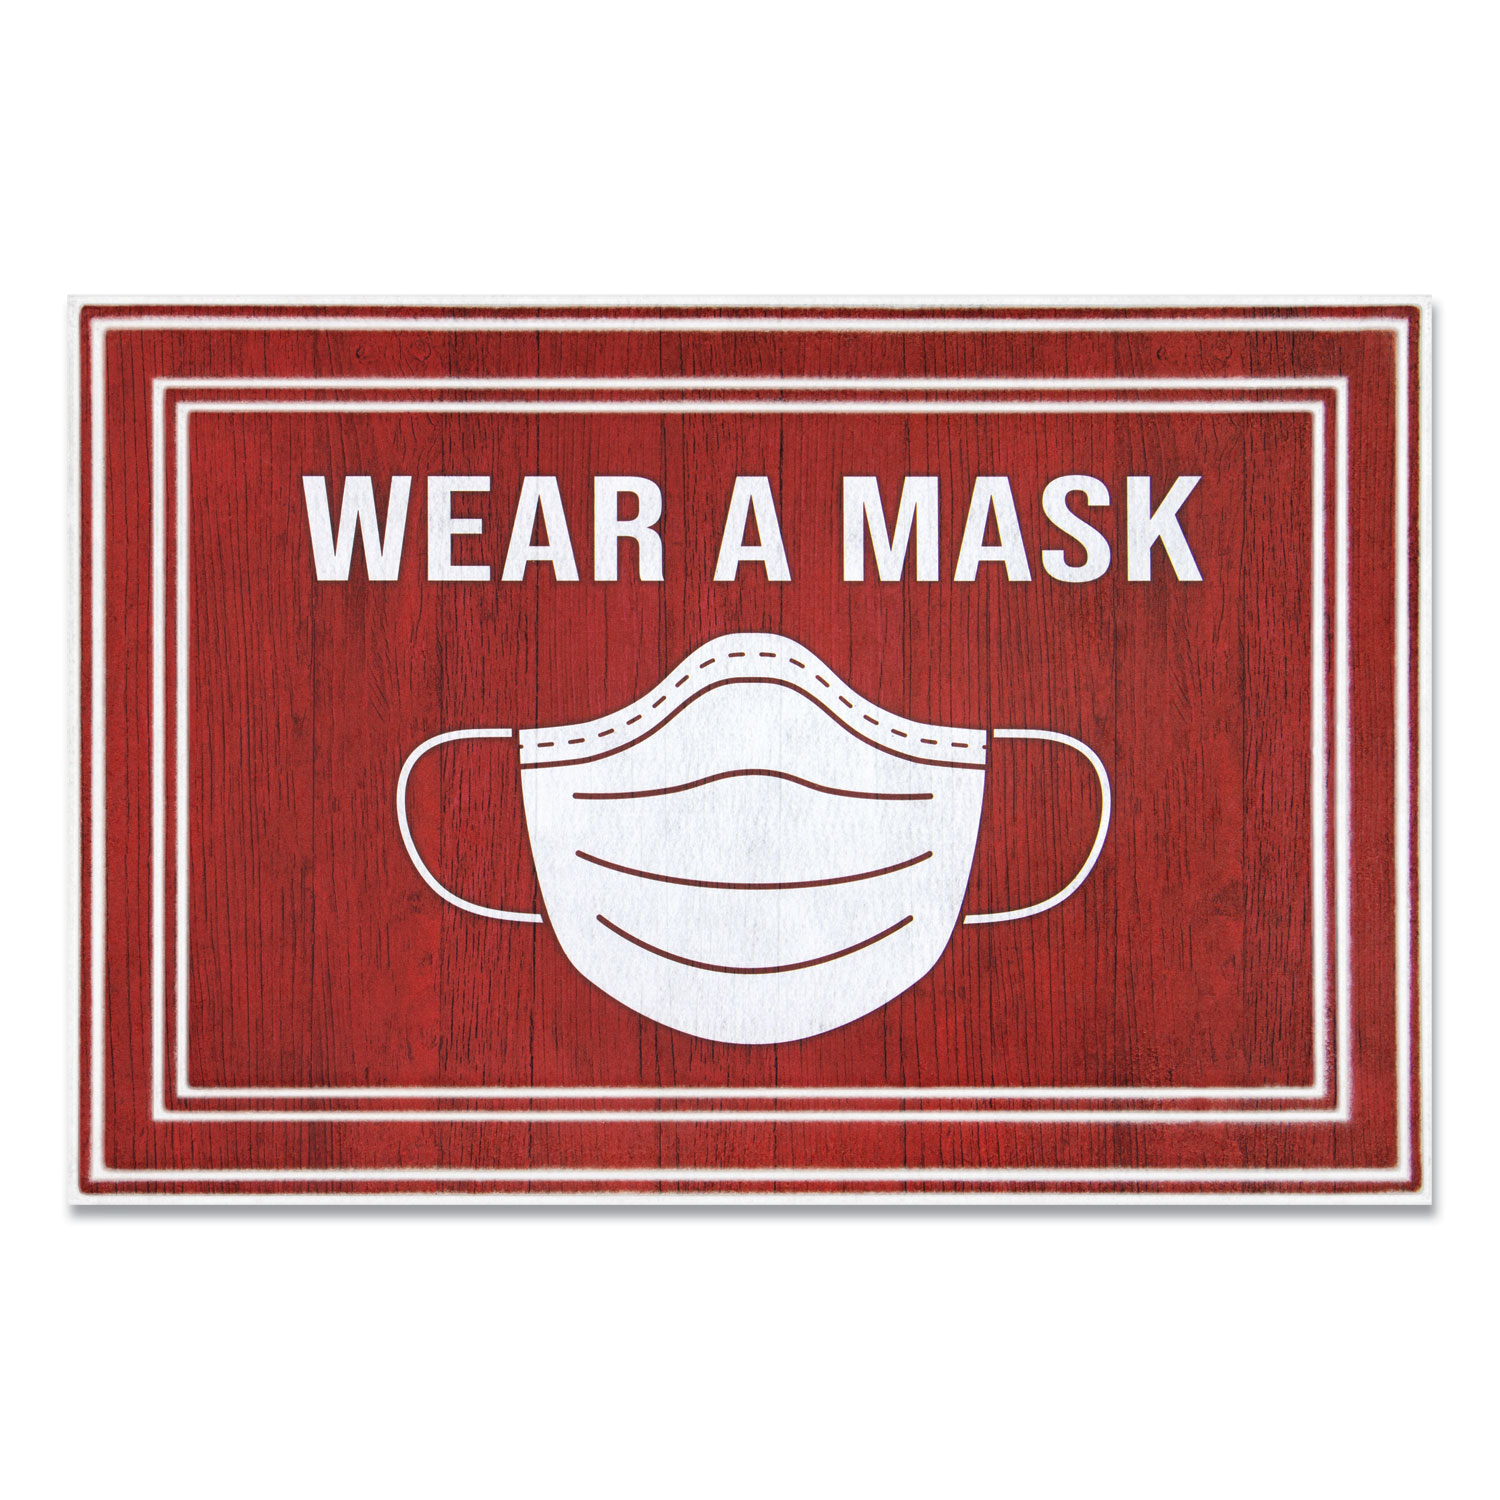 Apache Mills® Message Floor Mats, 24 x 36, Red/White, Wear A Mask